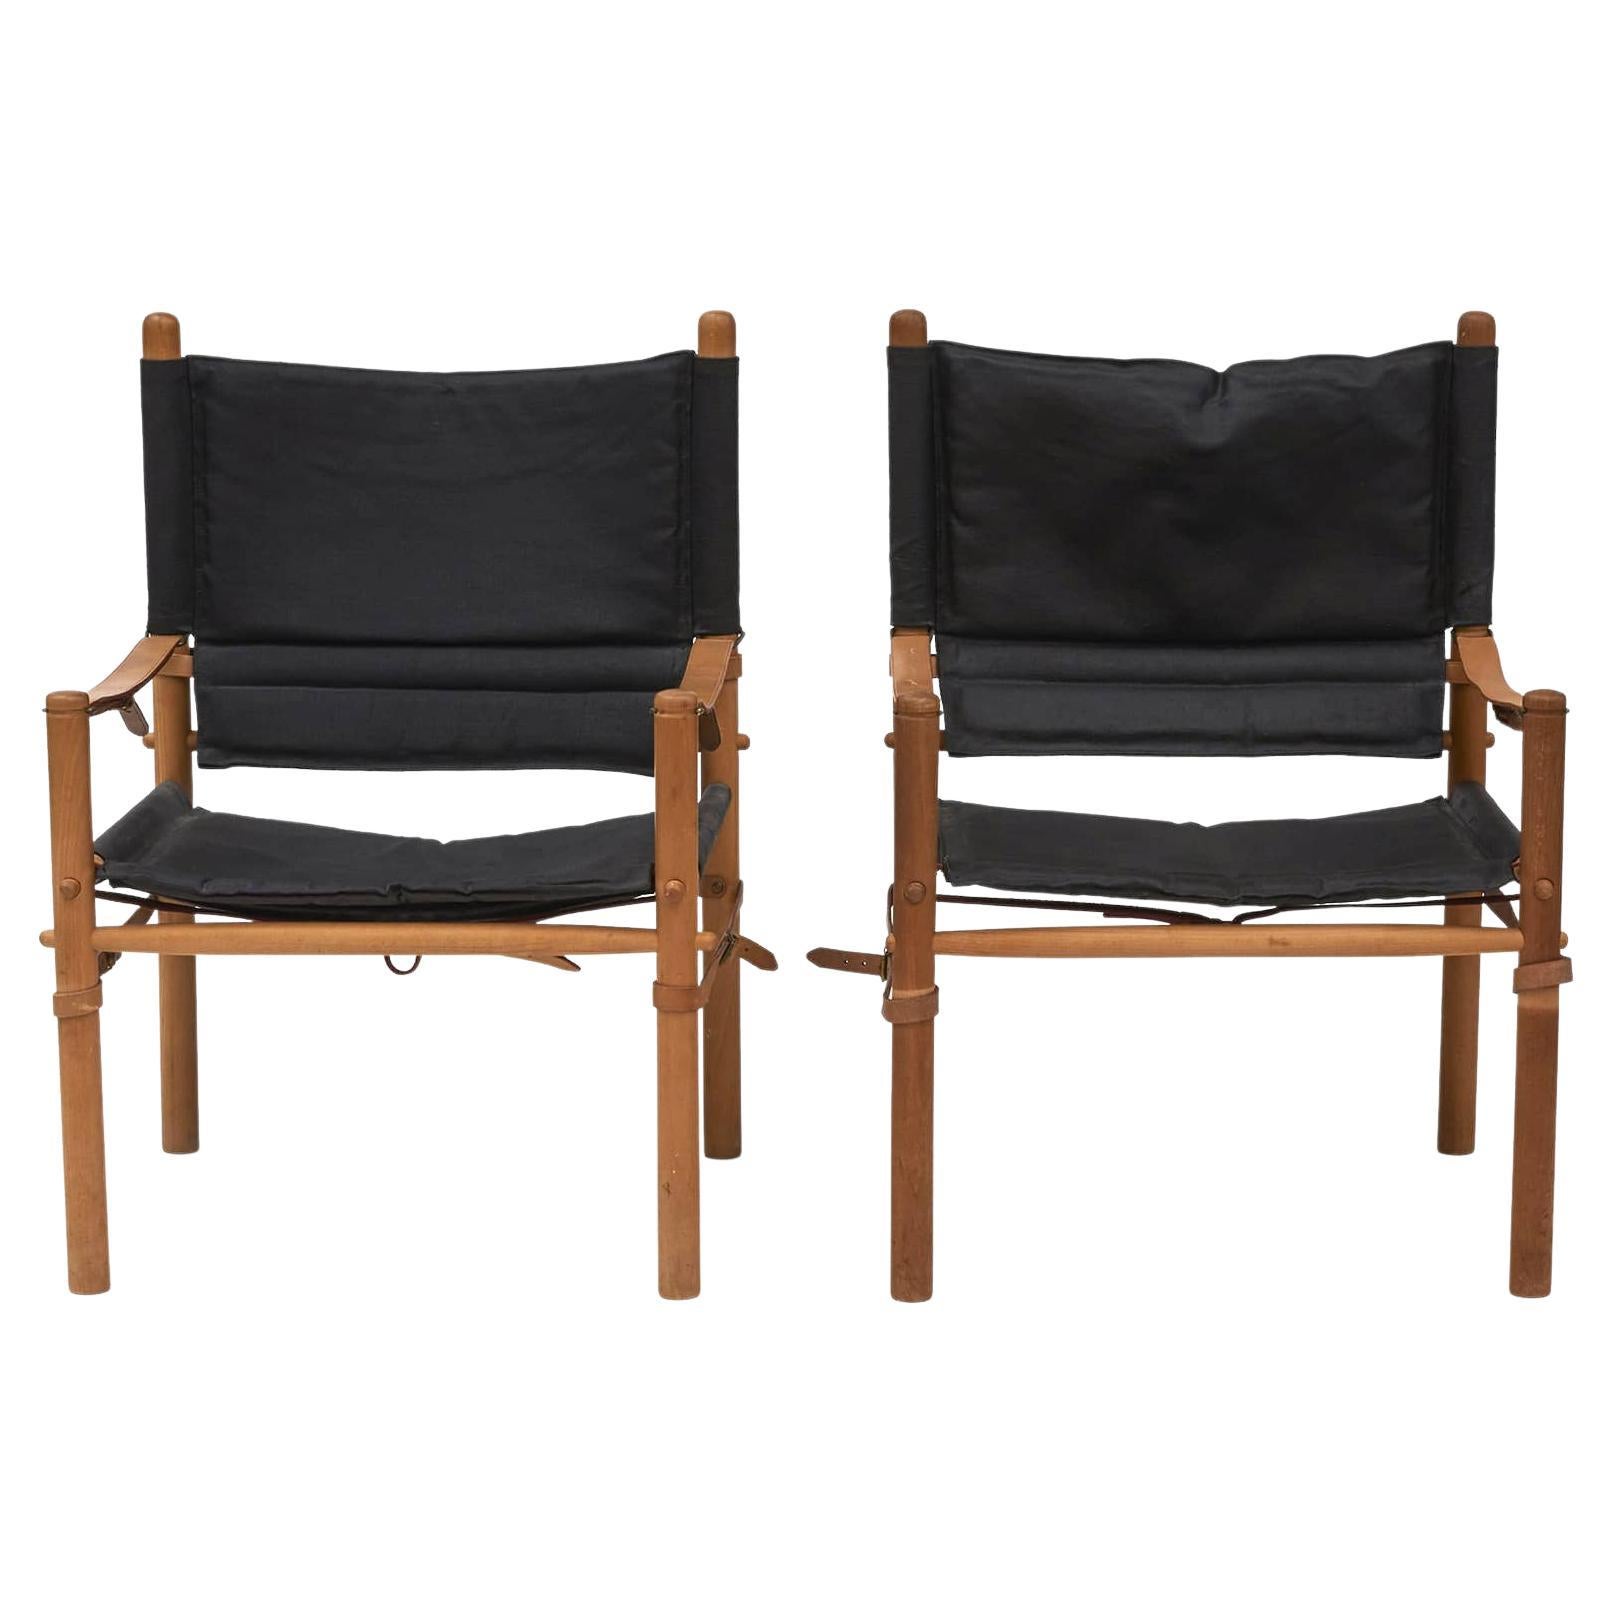 Pair of Axel Thygesen Oasis Safari Chairs for Interna, Denmark, 1960's For Sale